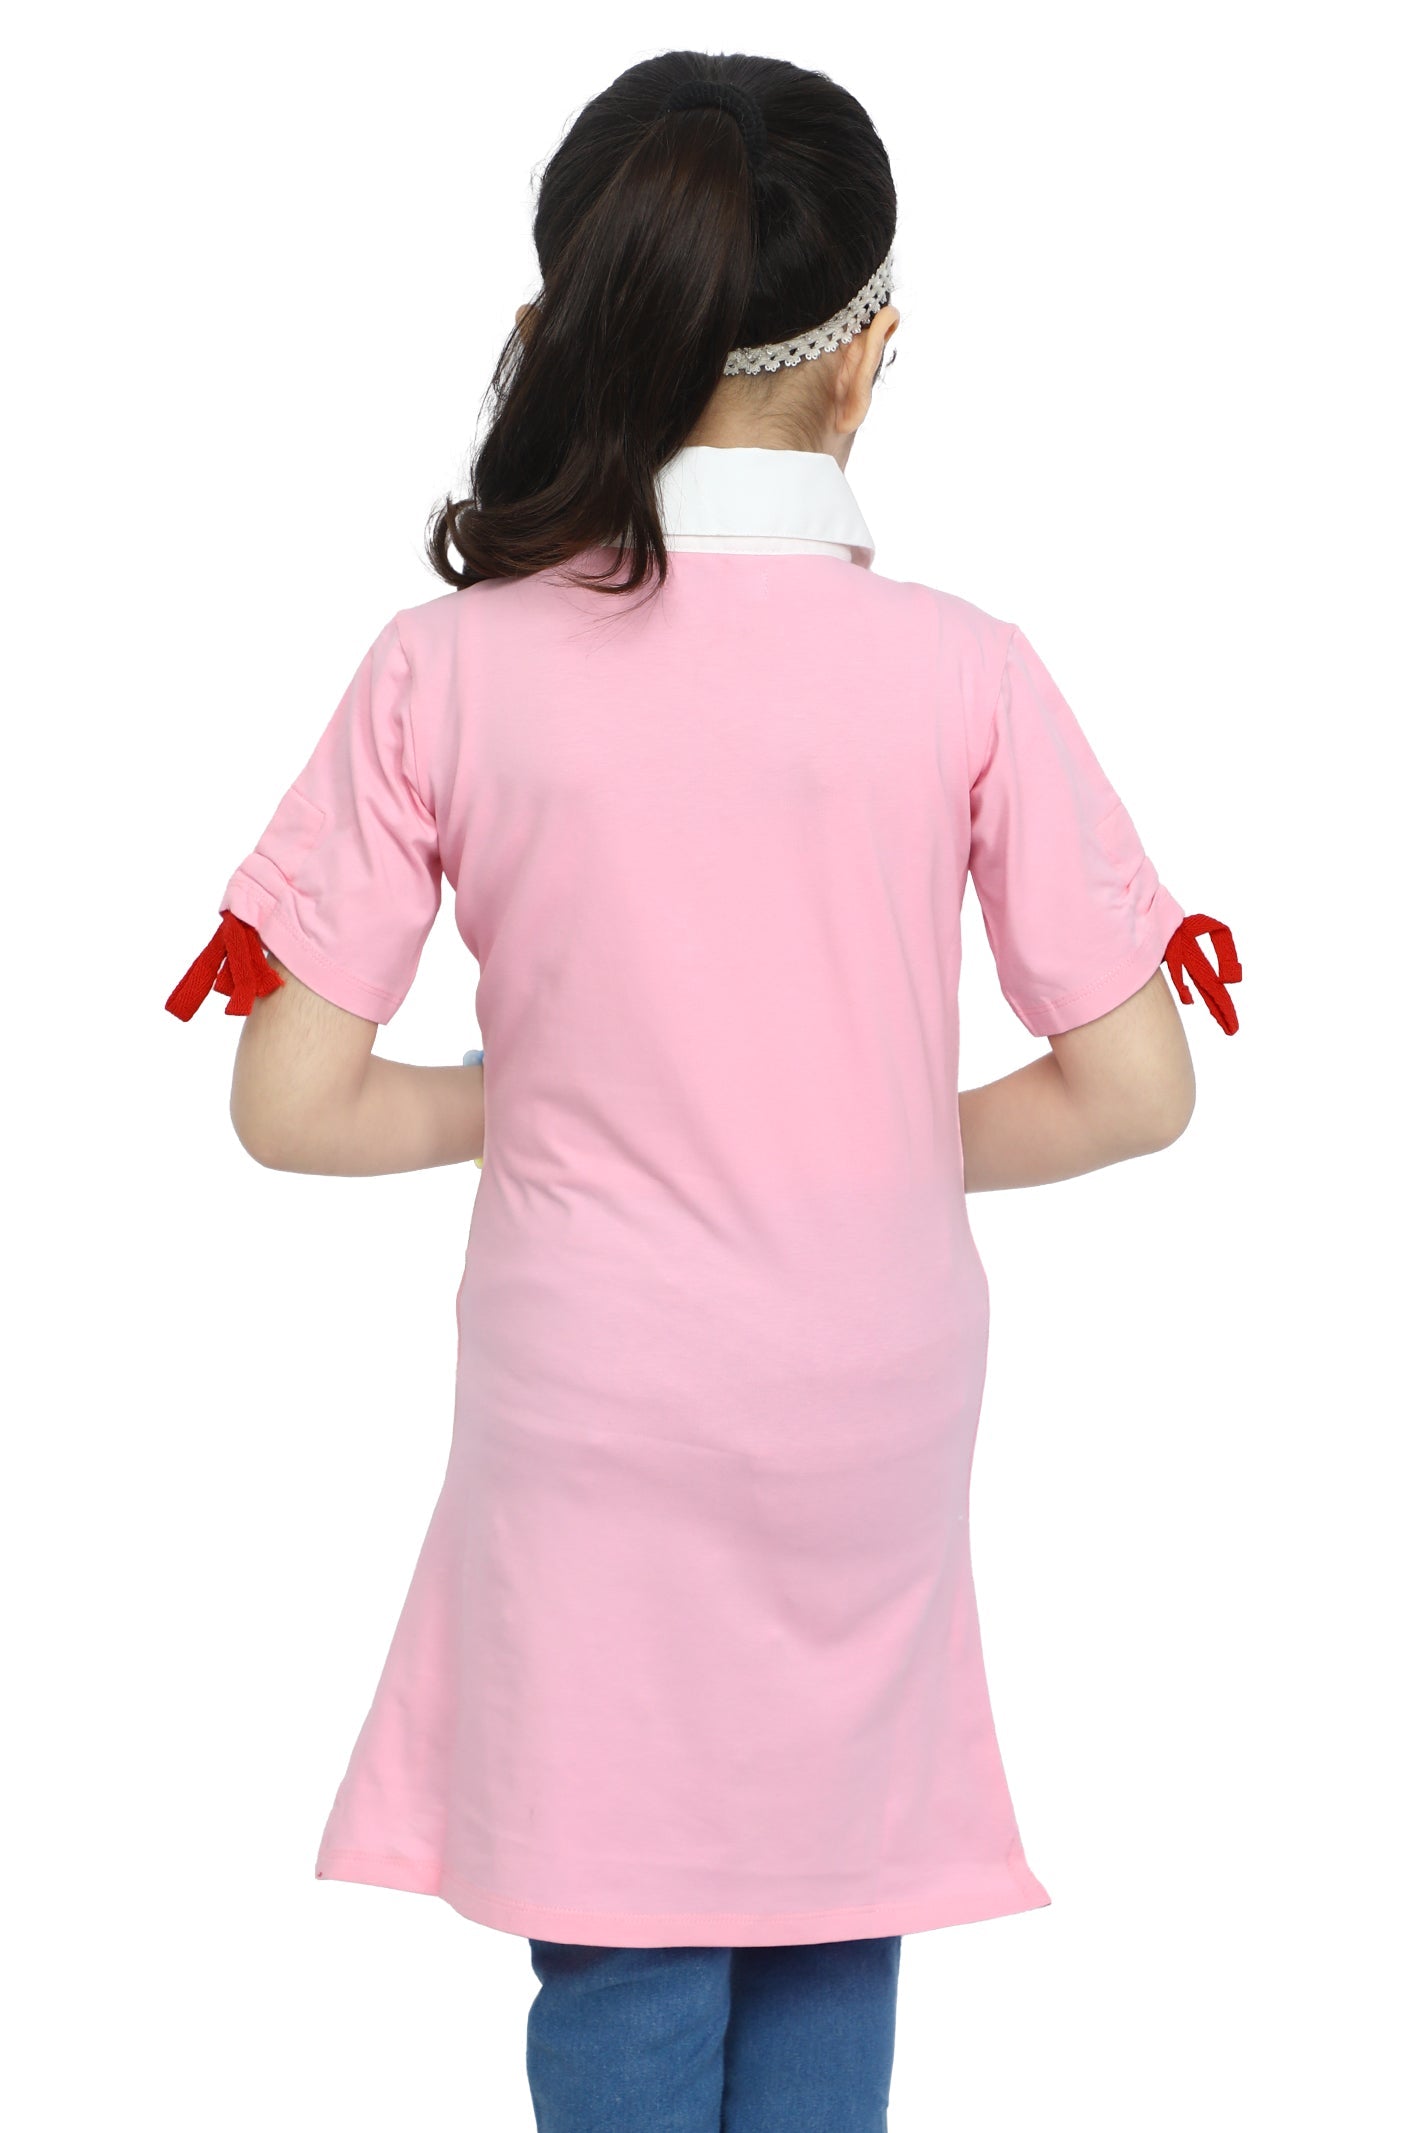 Girls T-Shirt In Pink SKU: KGA-0145-PINK - Diners